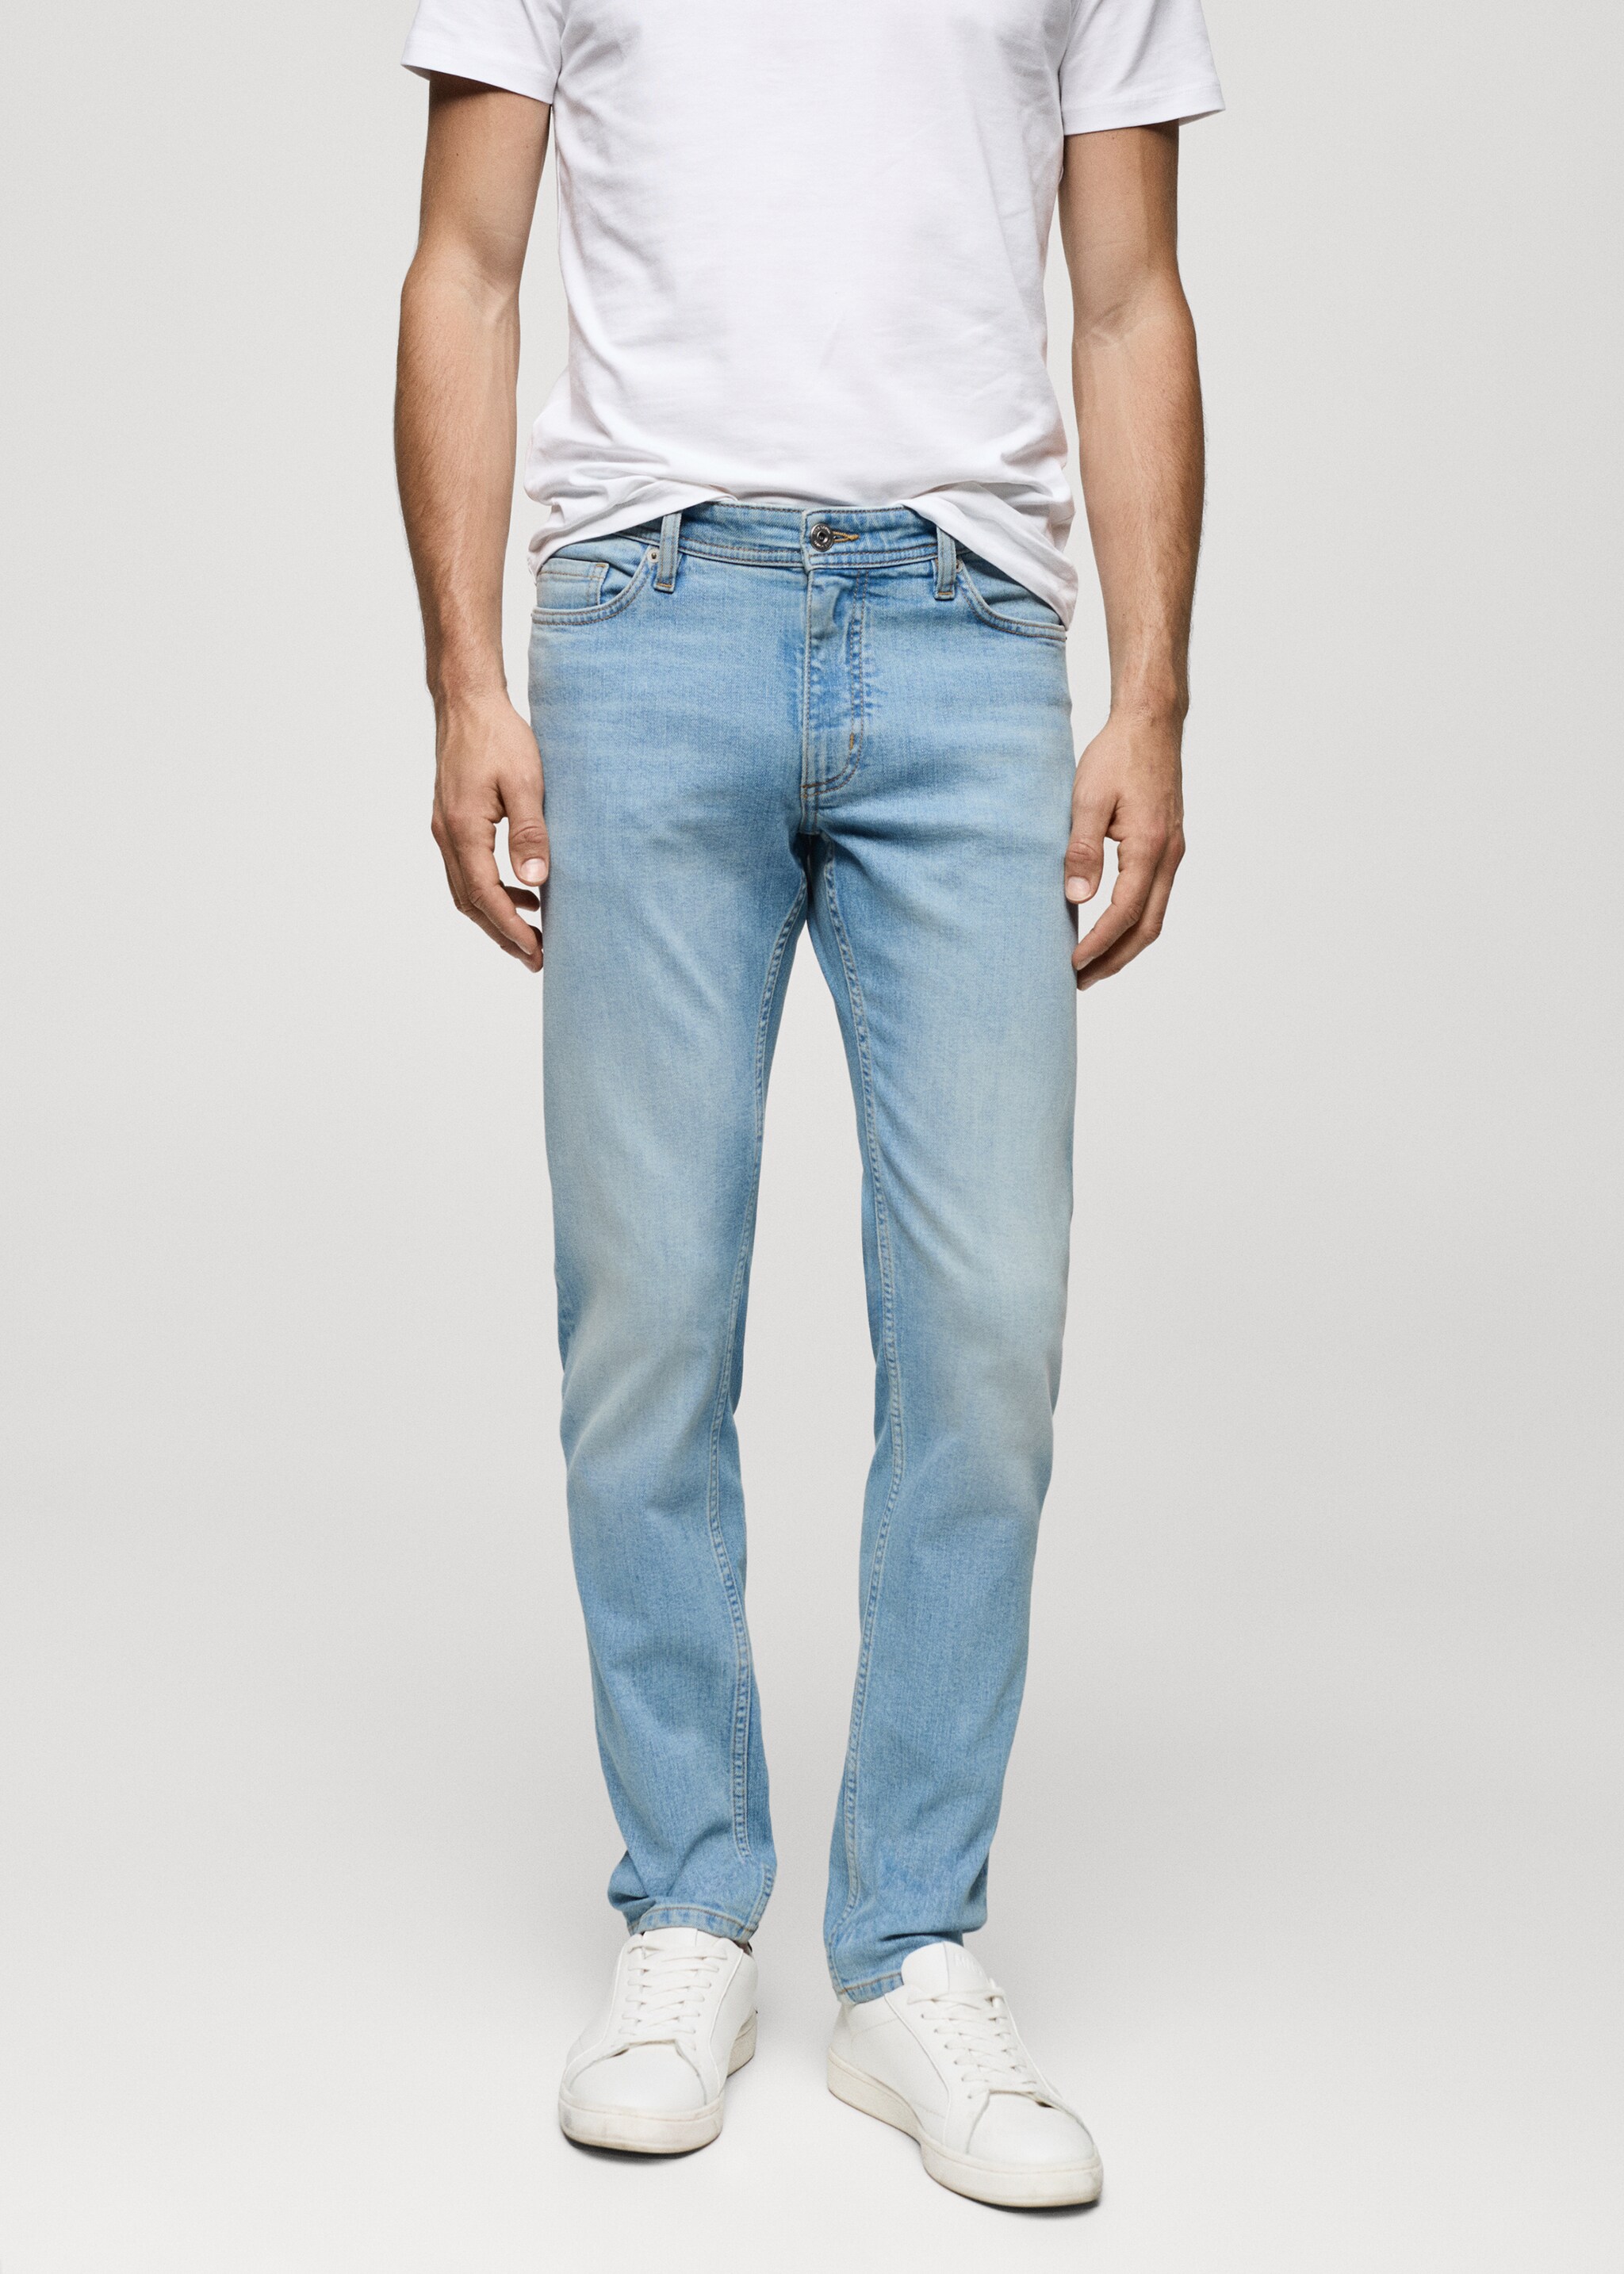 Jan slim fit jeans - Middenvlak